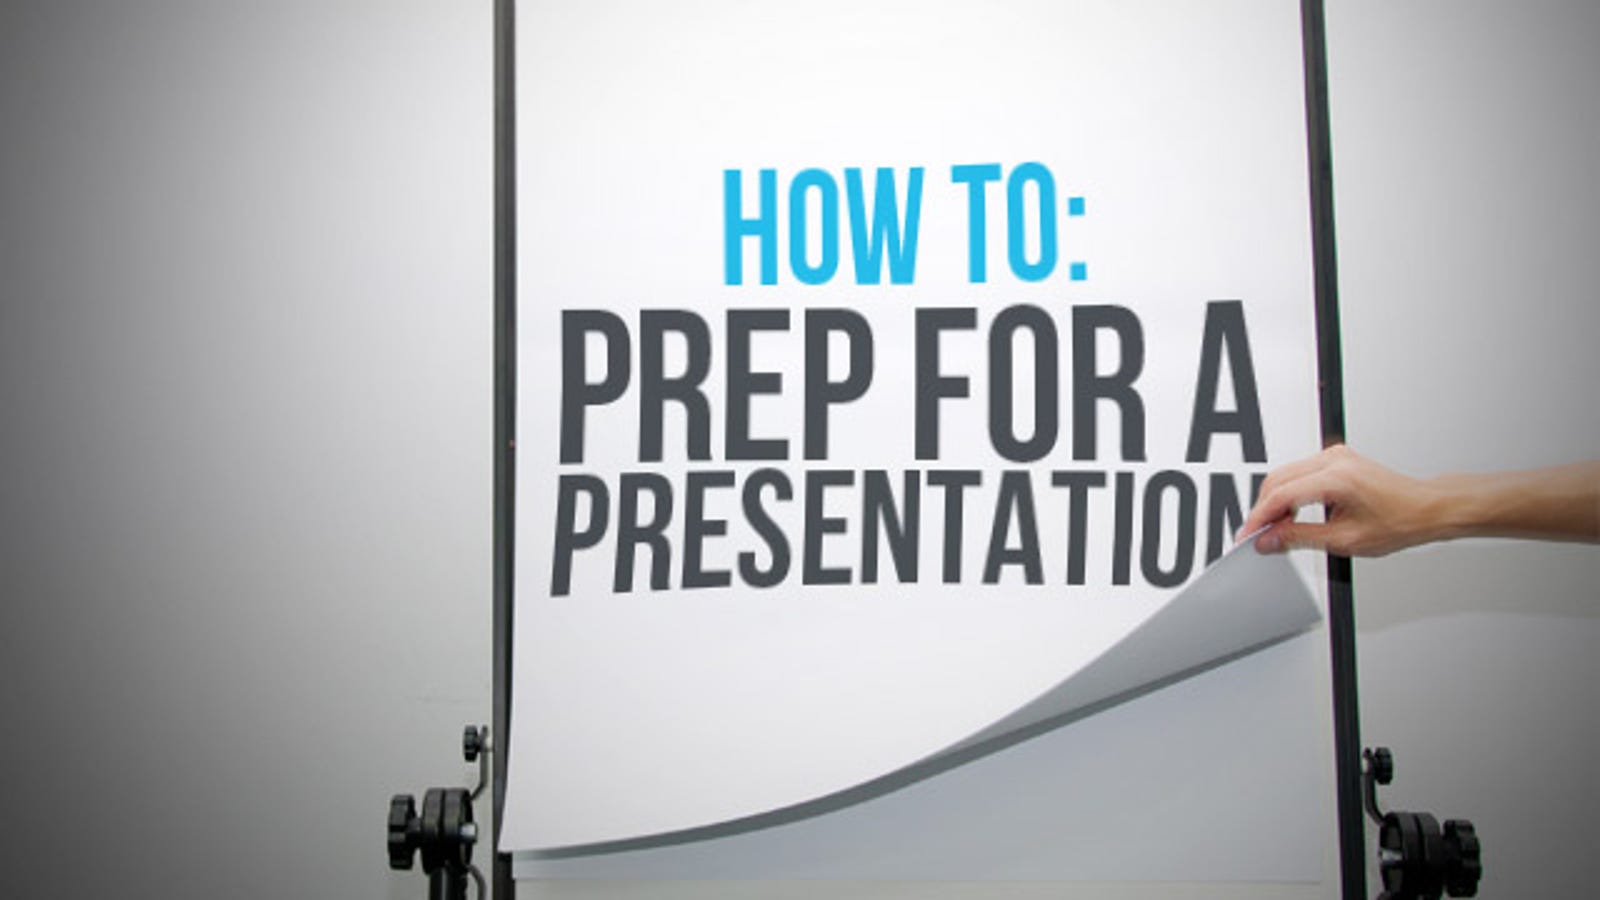 preparing presentation